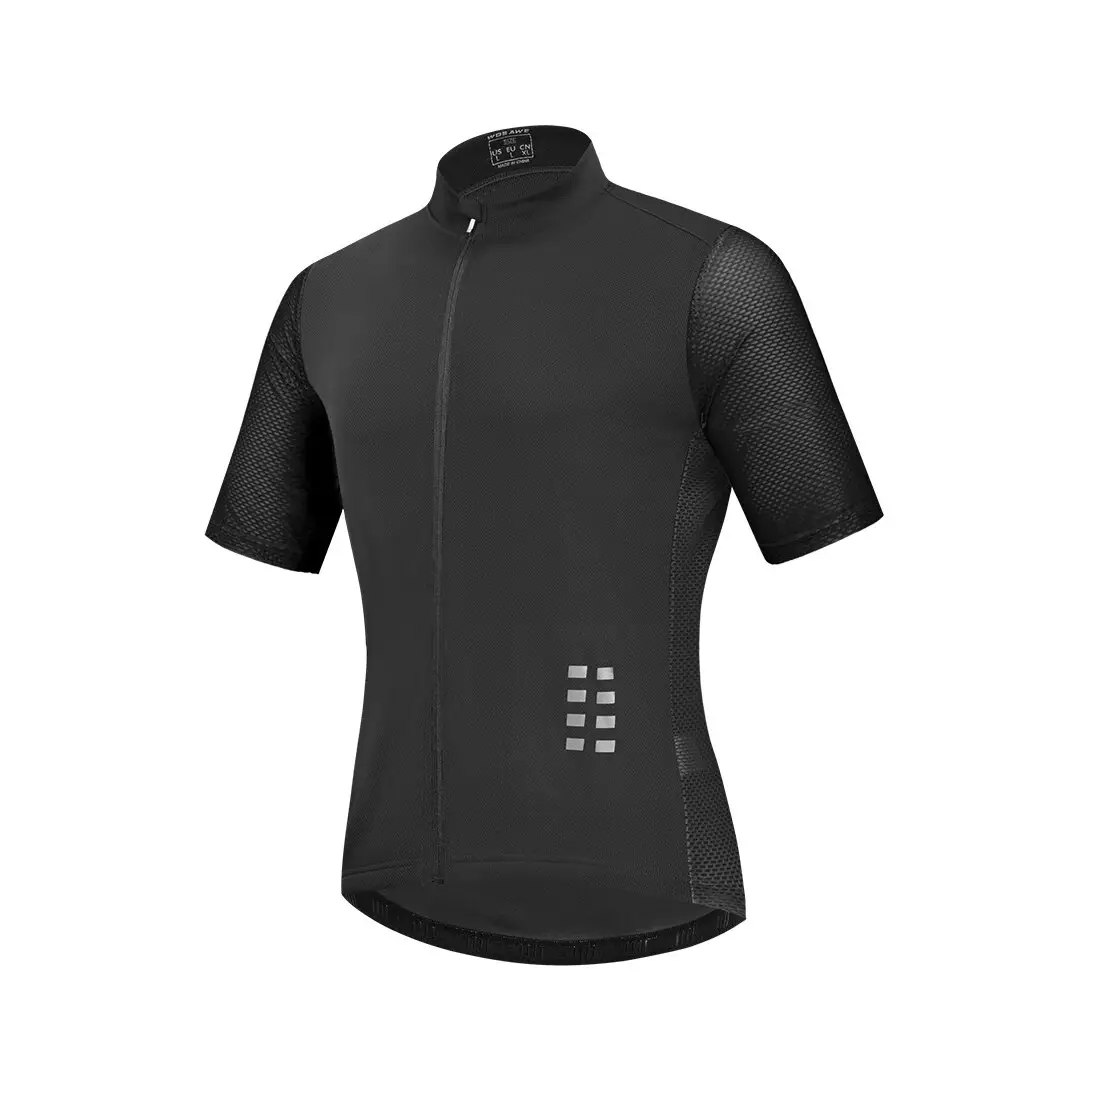 WOSAWE BL247-B men's short sleeve cycling jersey, black